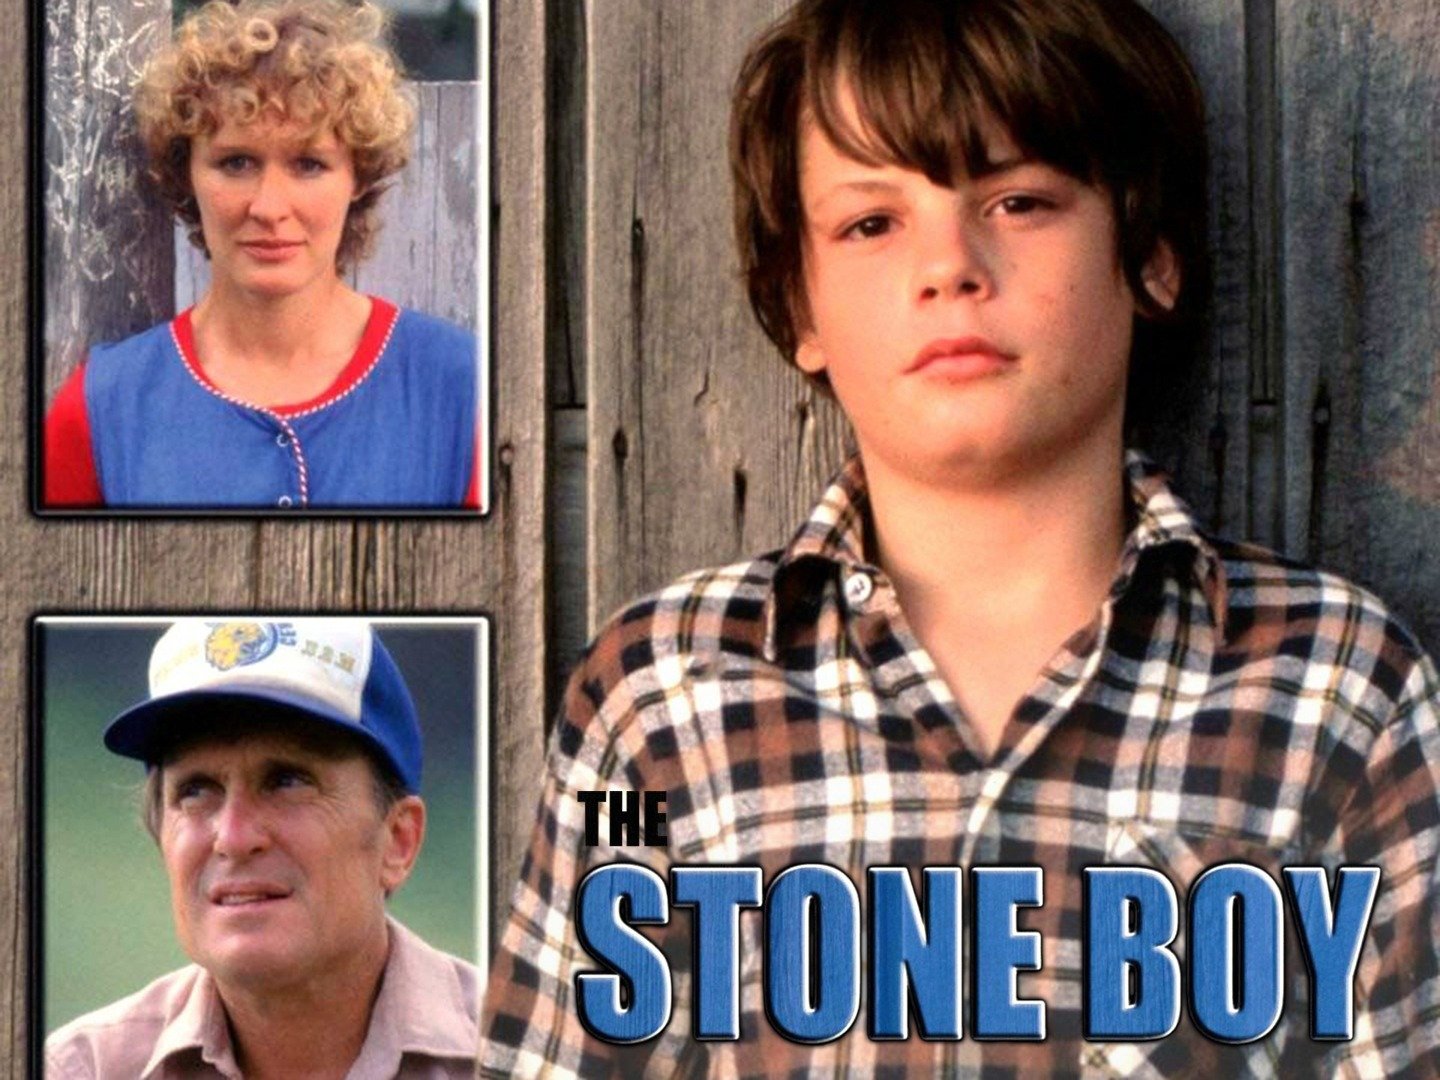 Stone boy. The Stone boy.